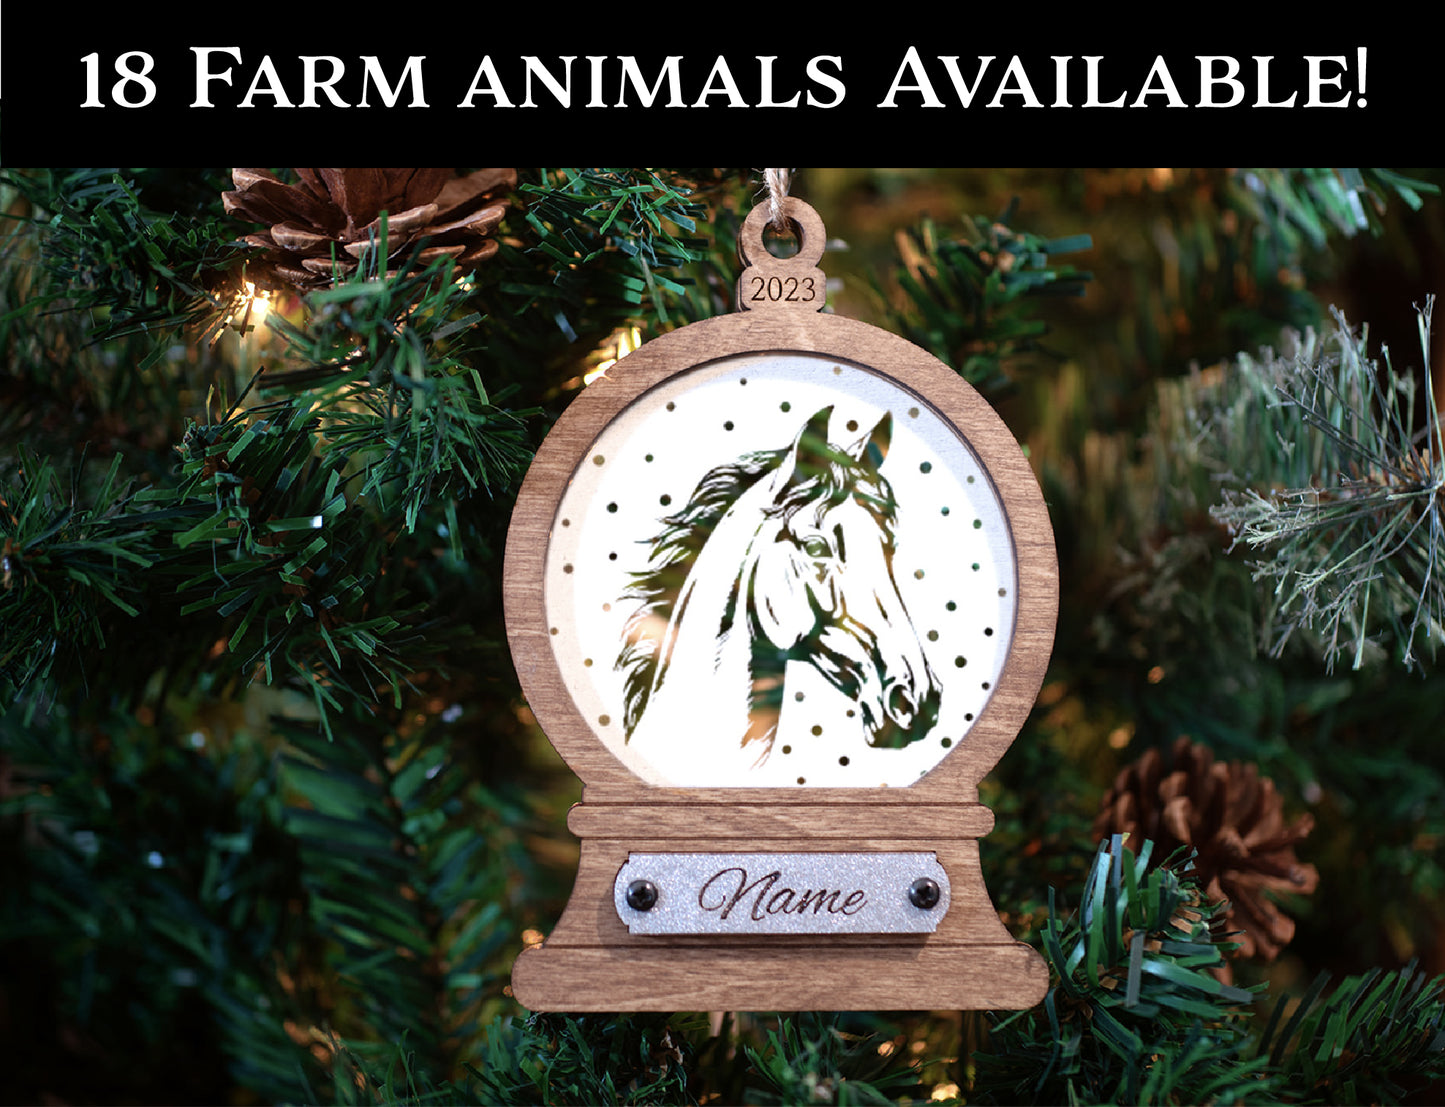 Personalized Engraved Farm Animal Snowglobe Ornaments